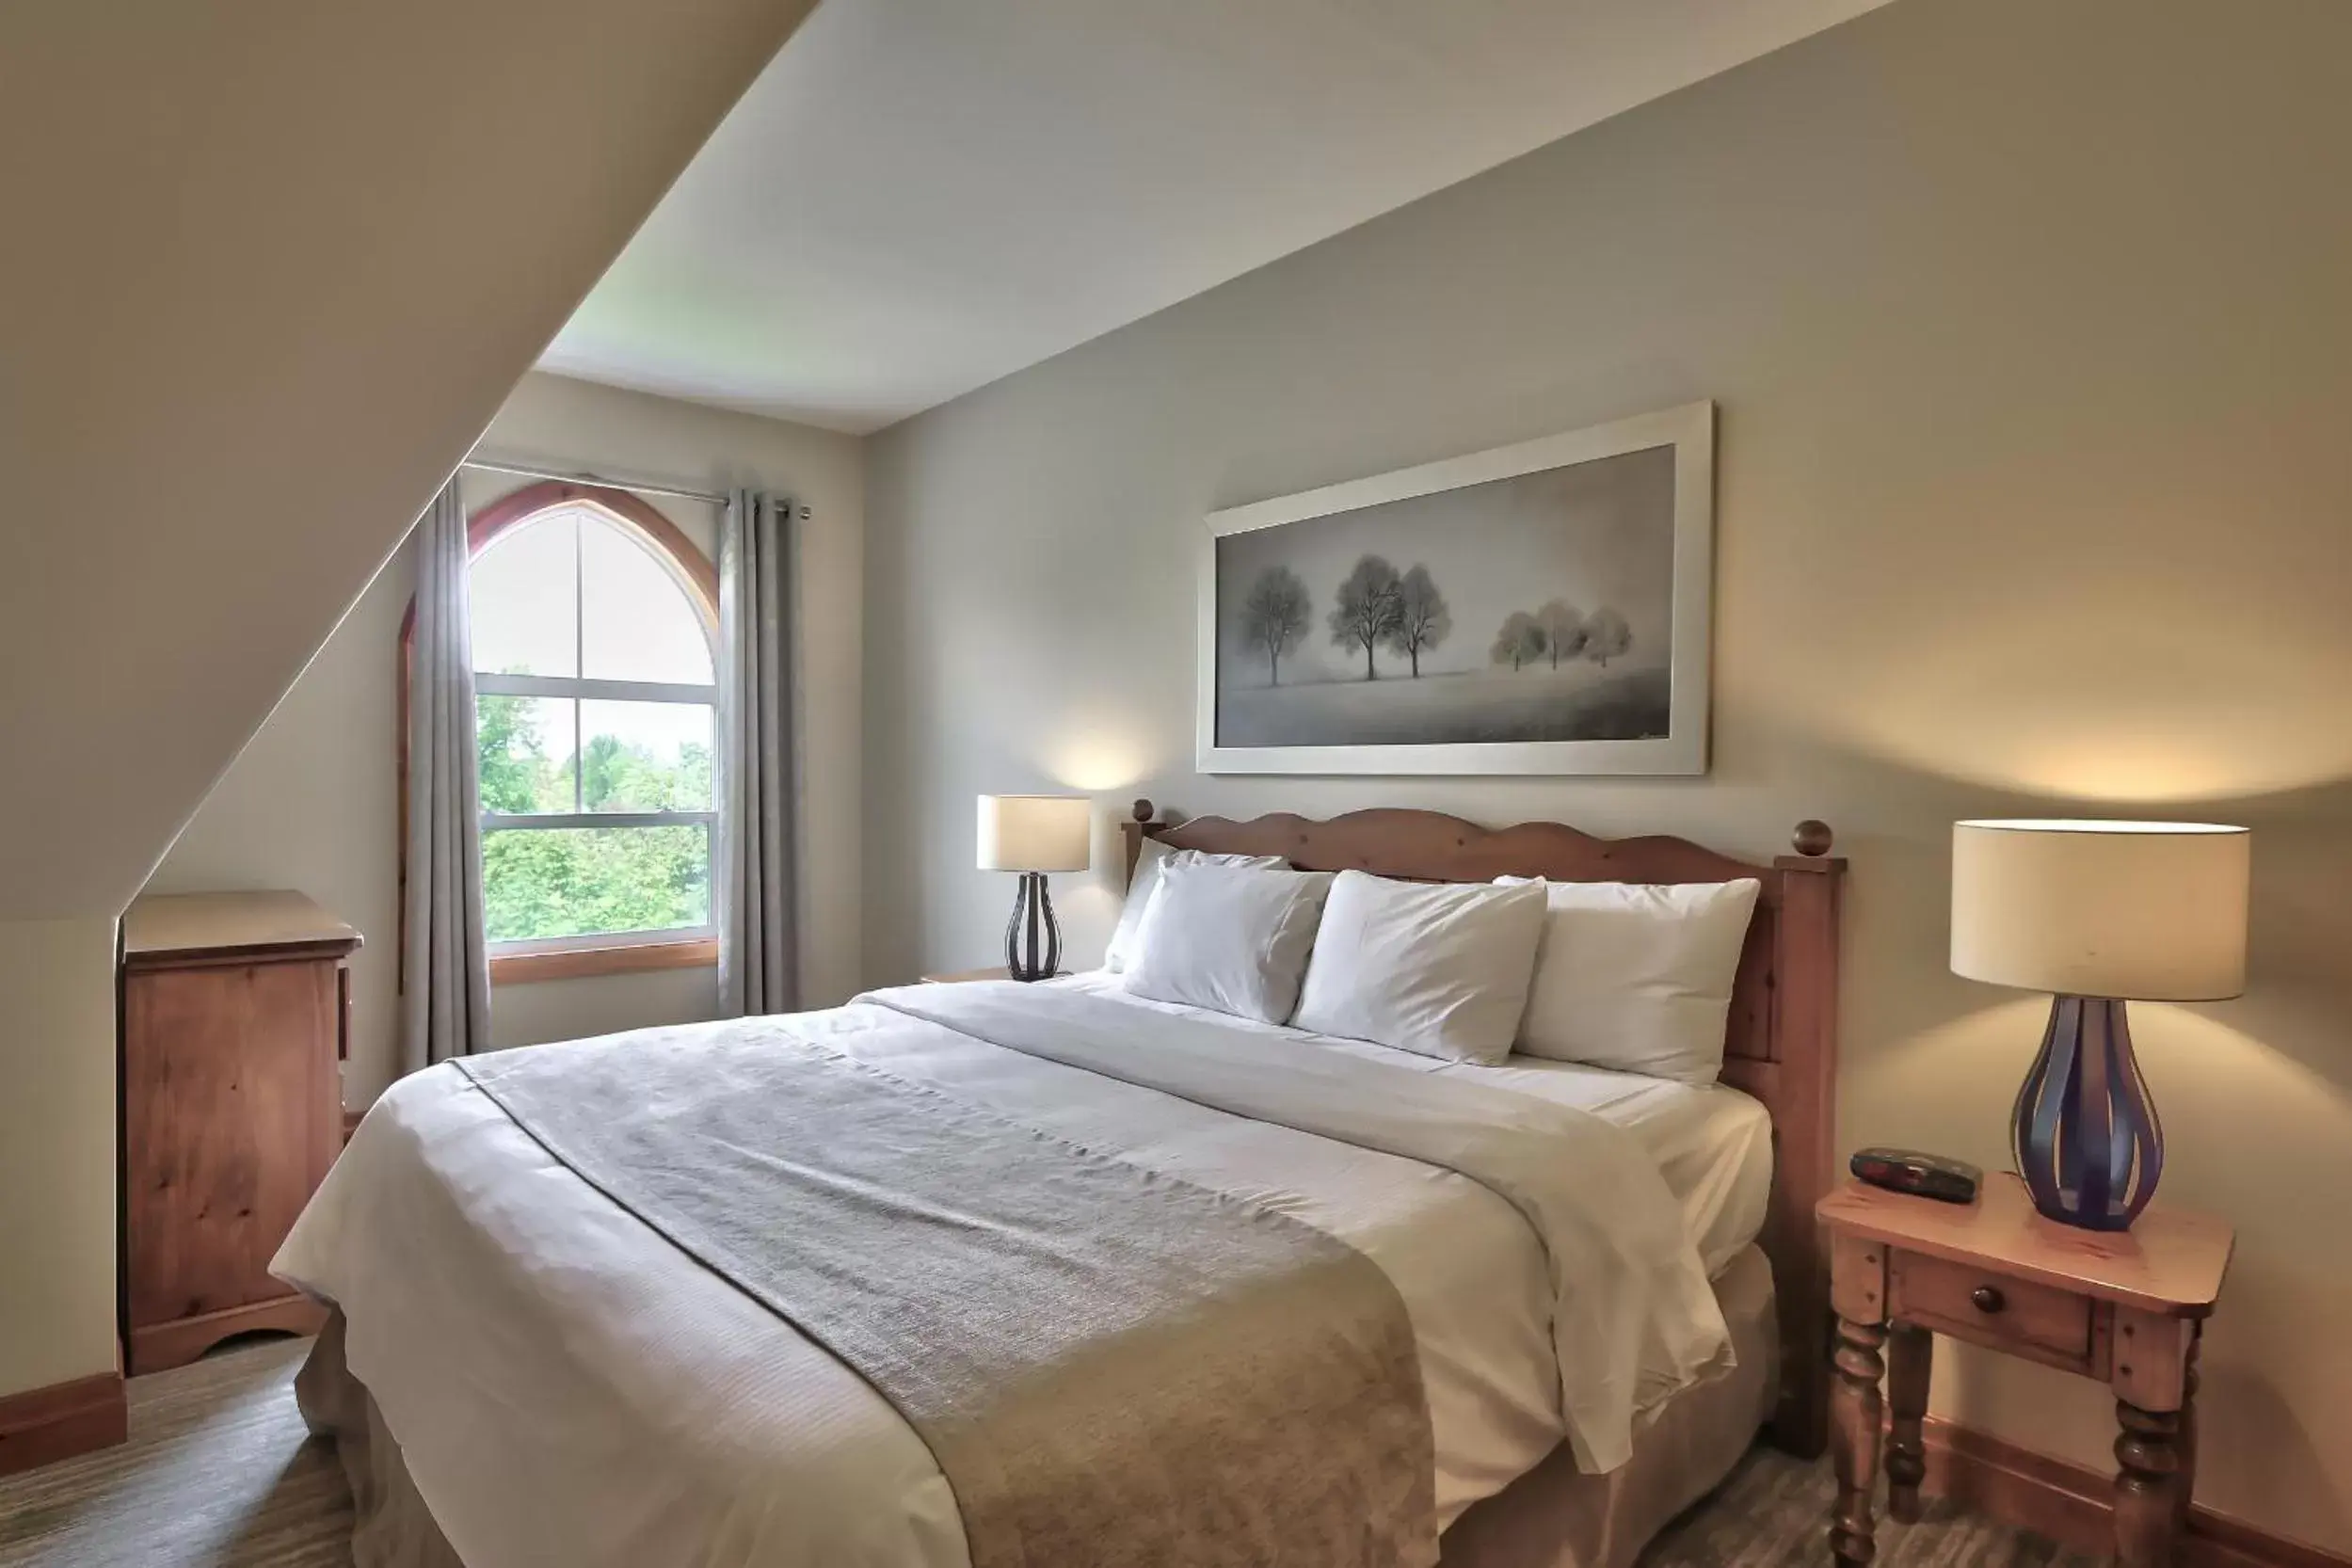 Historic Snowbridge One Bedroom in Blue Mountain Resort Home Collection